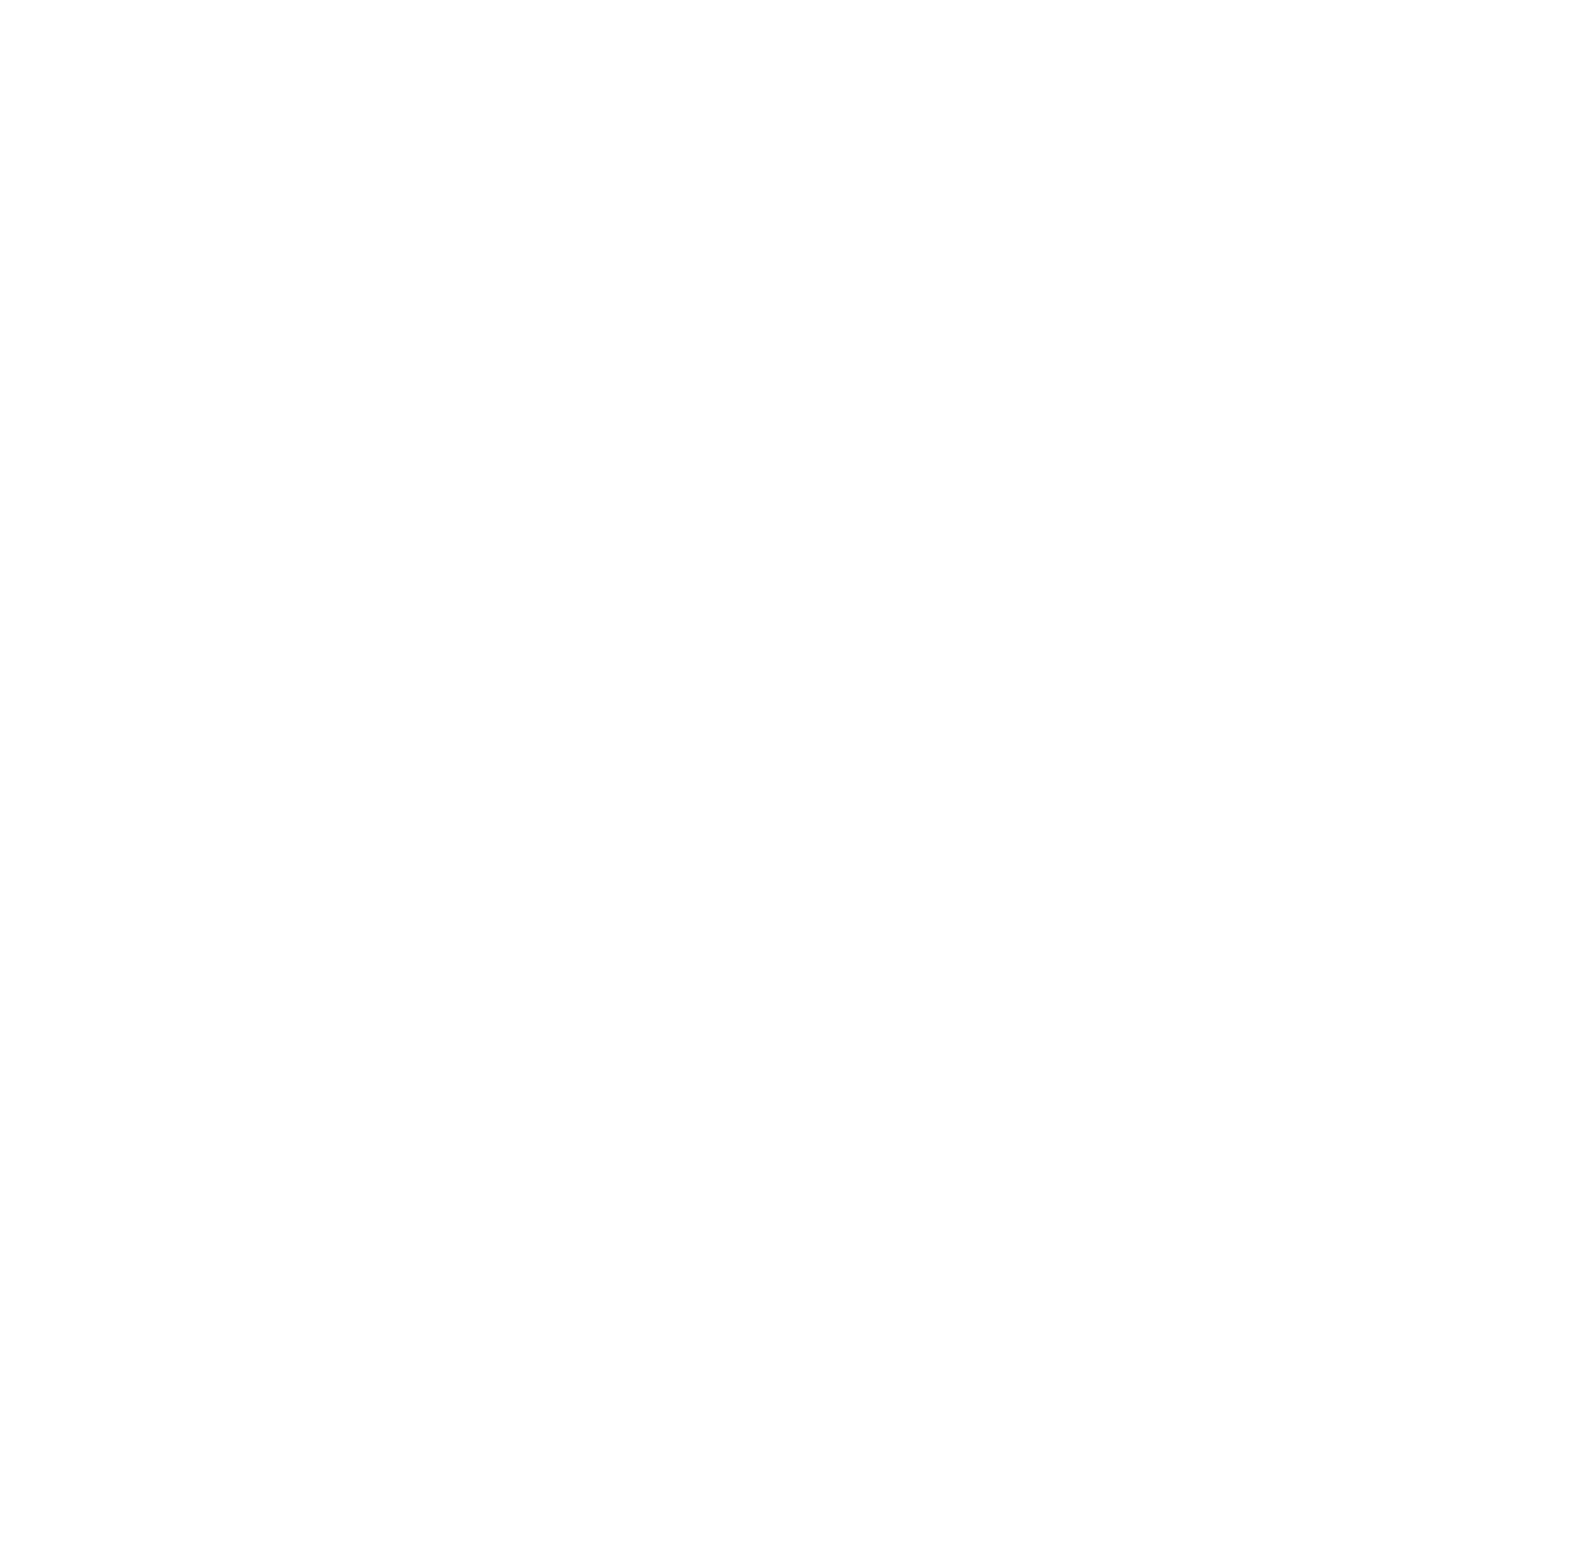 DKSH Holding logo pour fonds sombres (PNG transparent)